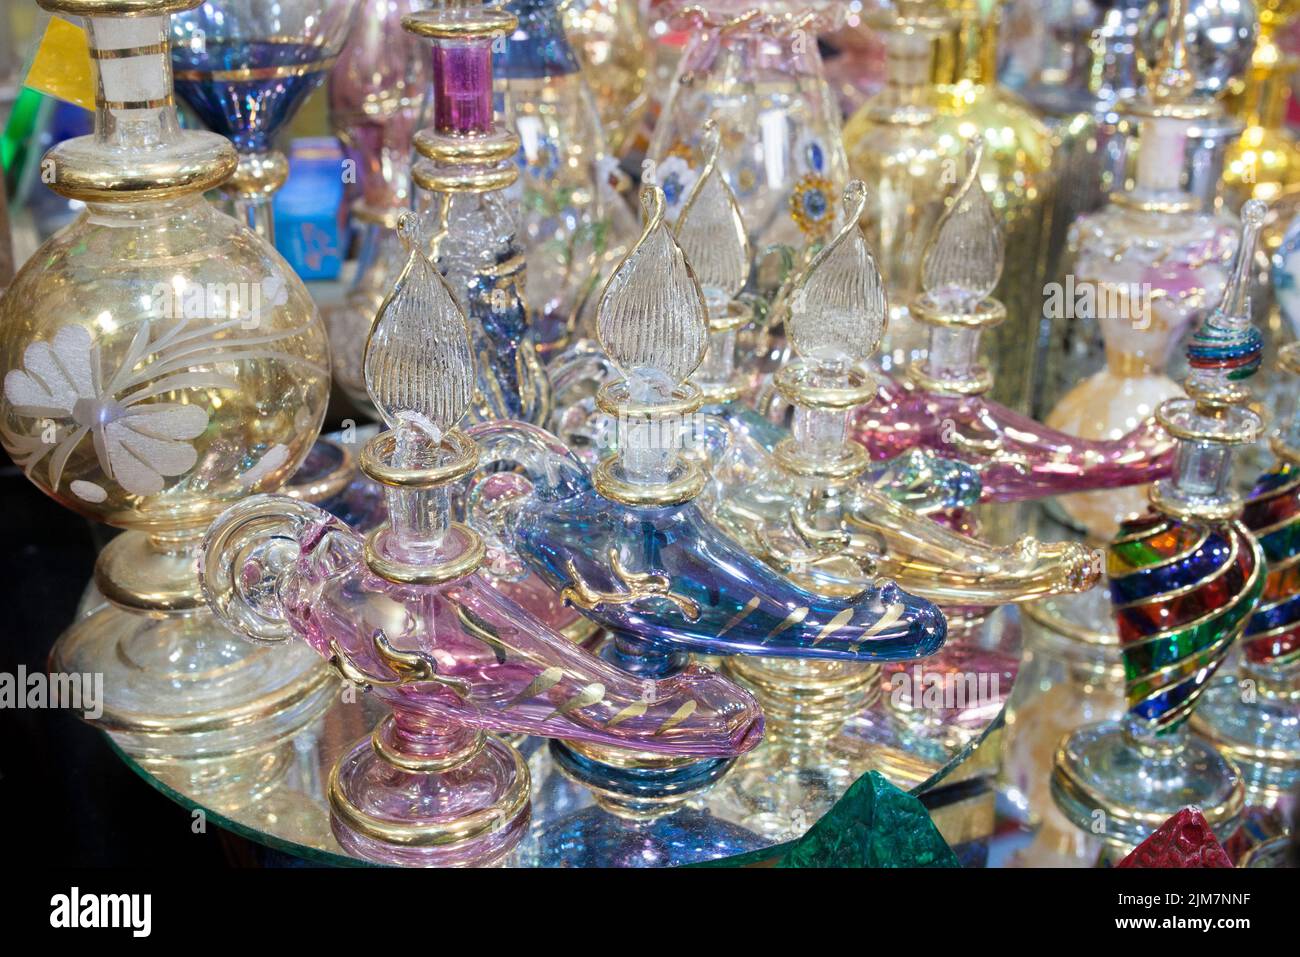 Contenedores de cristal de aromas árabes. Concepto de perfumes orientales Foto de stock